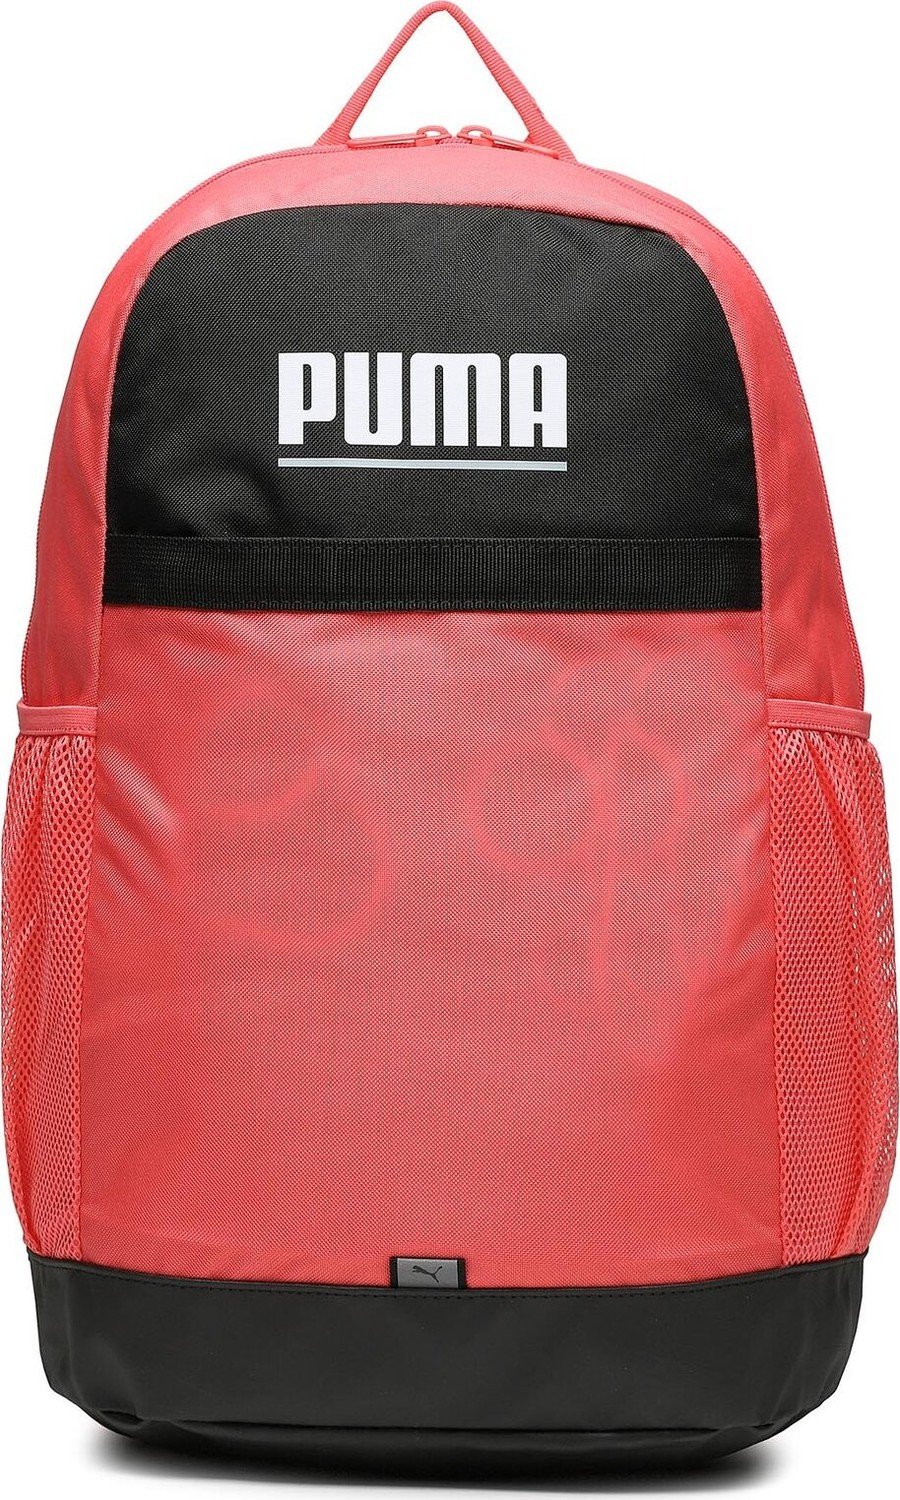 Batoh Puma Plus Backpack 079615 06 Electric Blush